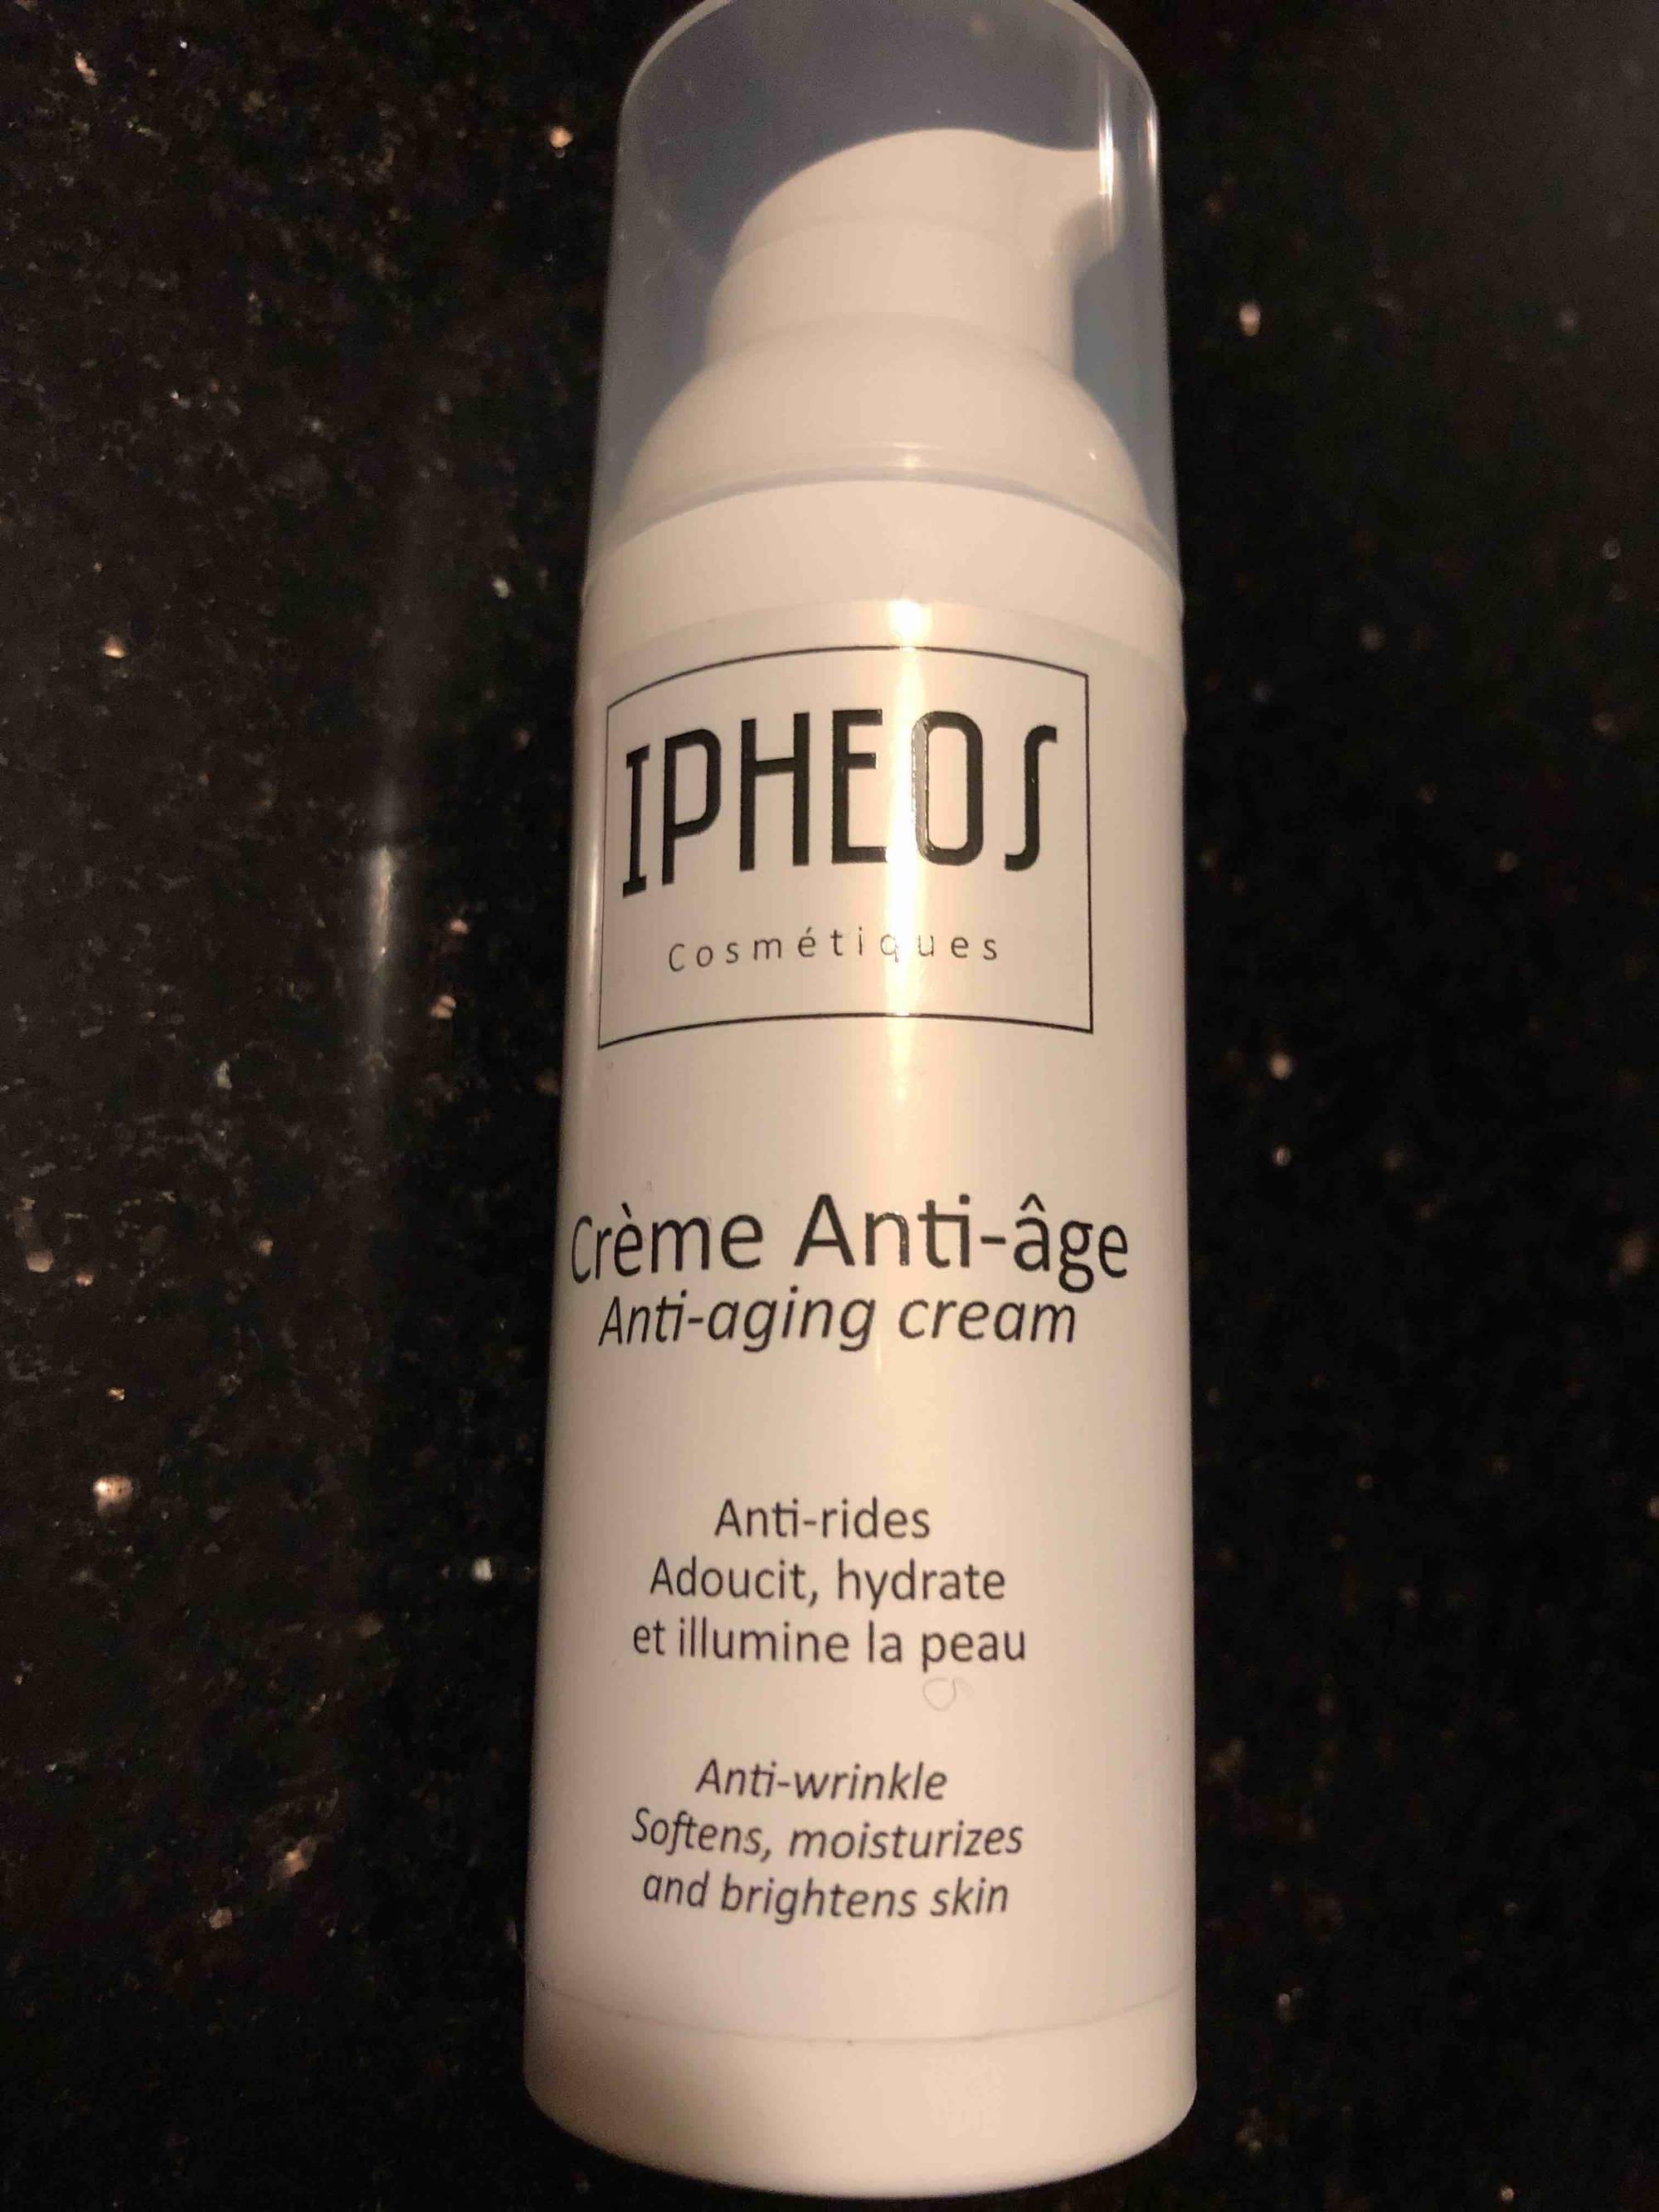 IPHEOS - Crème anti-âge